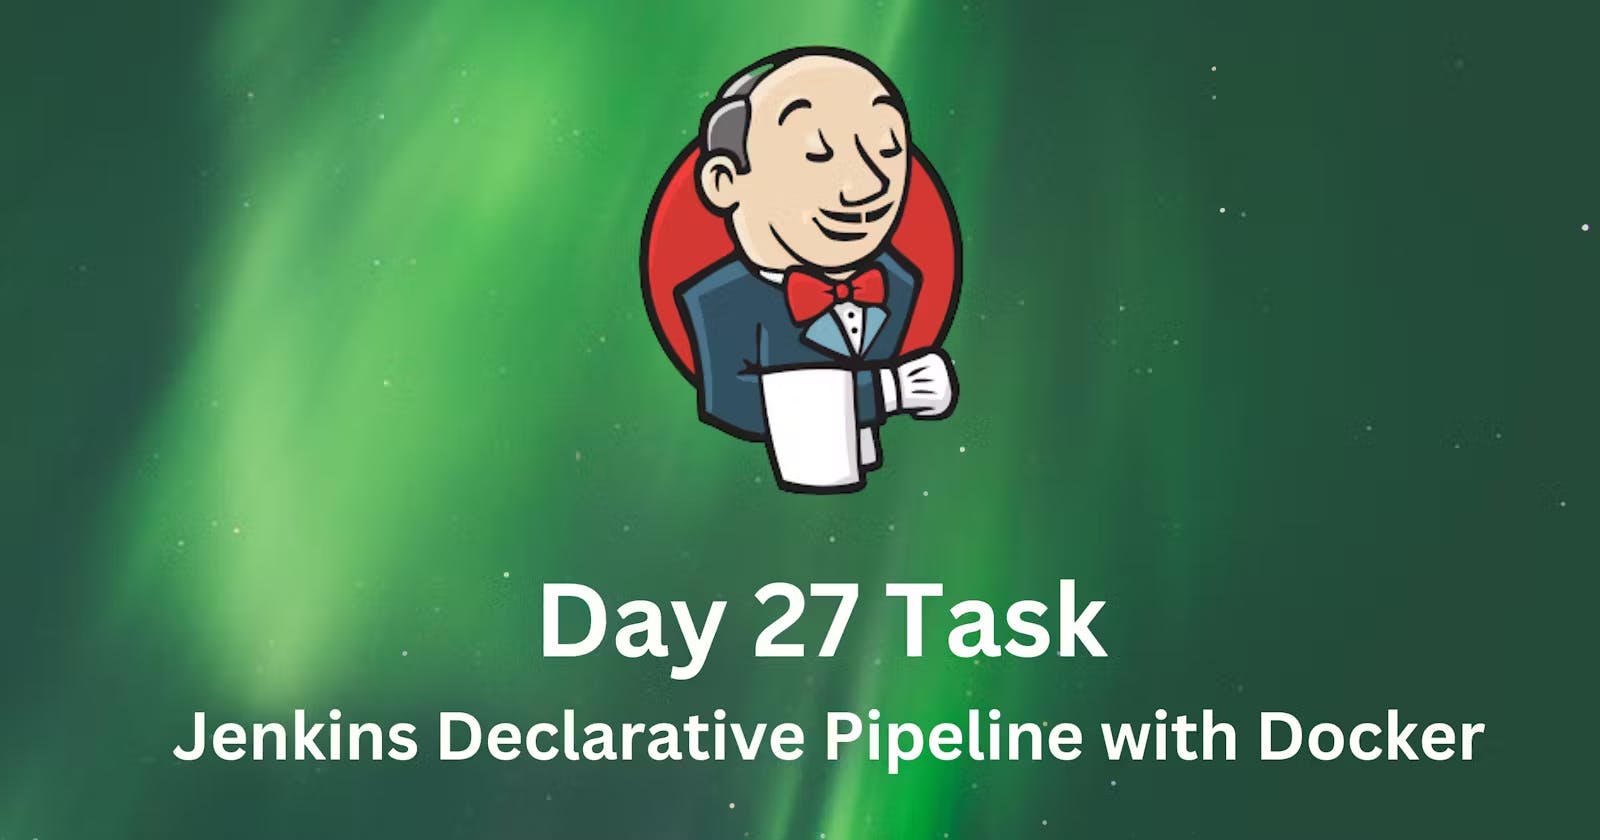 Day 27 - Jenkins Declarative Pipeline with Docker